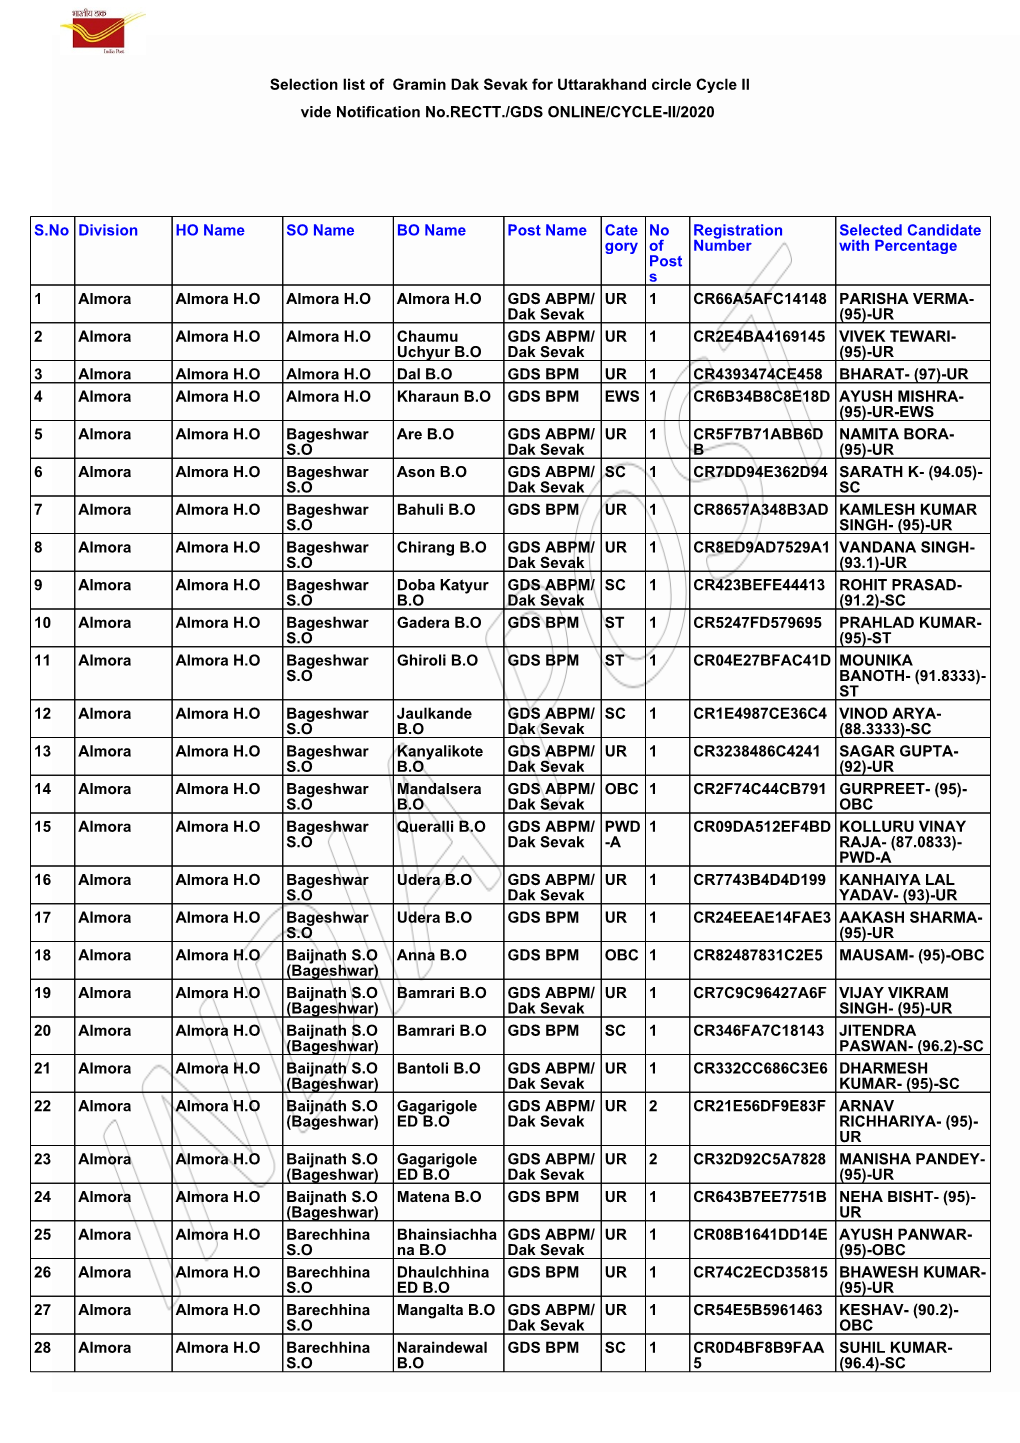 Selection List of Gramin Dak Sevak for Uttarakhand Circle Cycle II Vide Notification No.RECTT./GDS ONLINE/CYCLE-II/2020